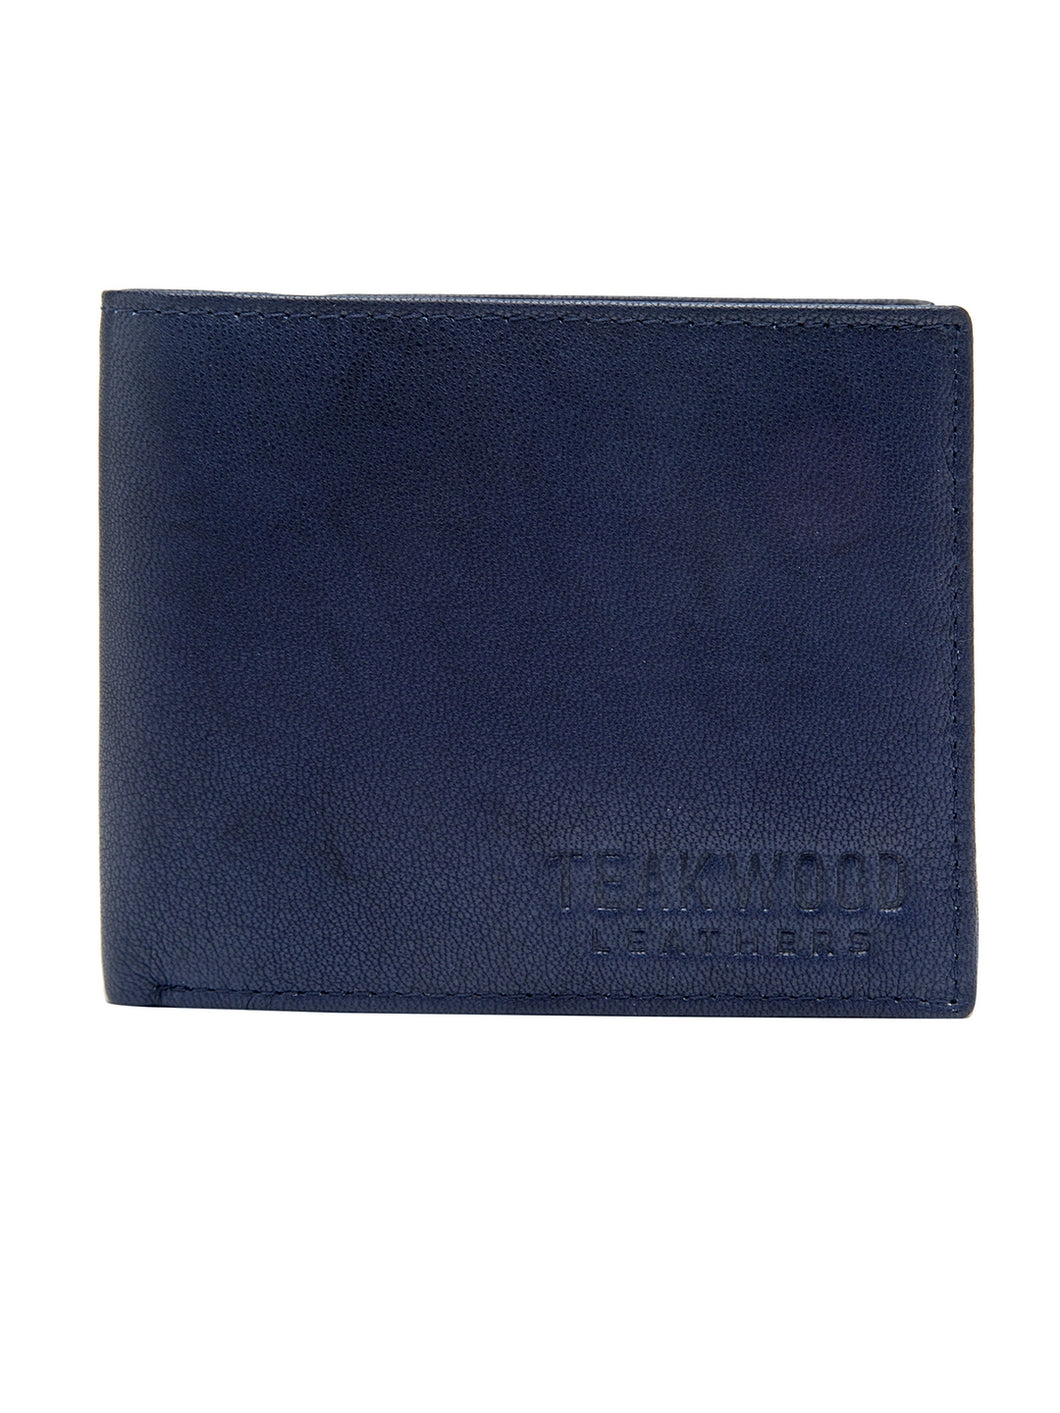 Teakwood Unisex Genuine Leather Blue Bi Fold Money Clip Wallet